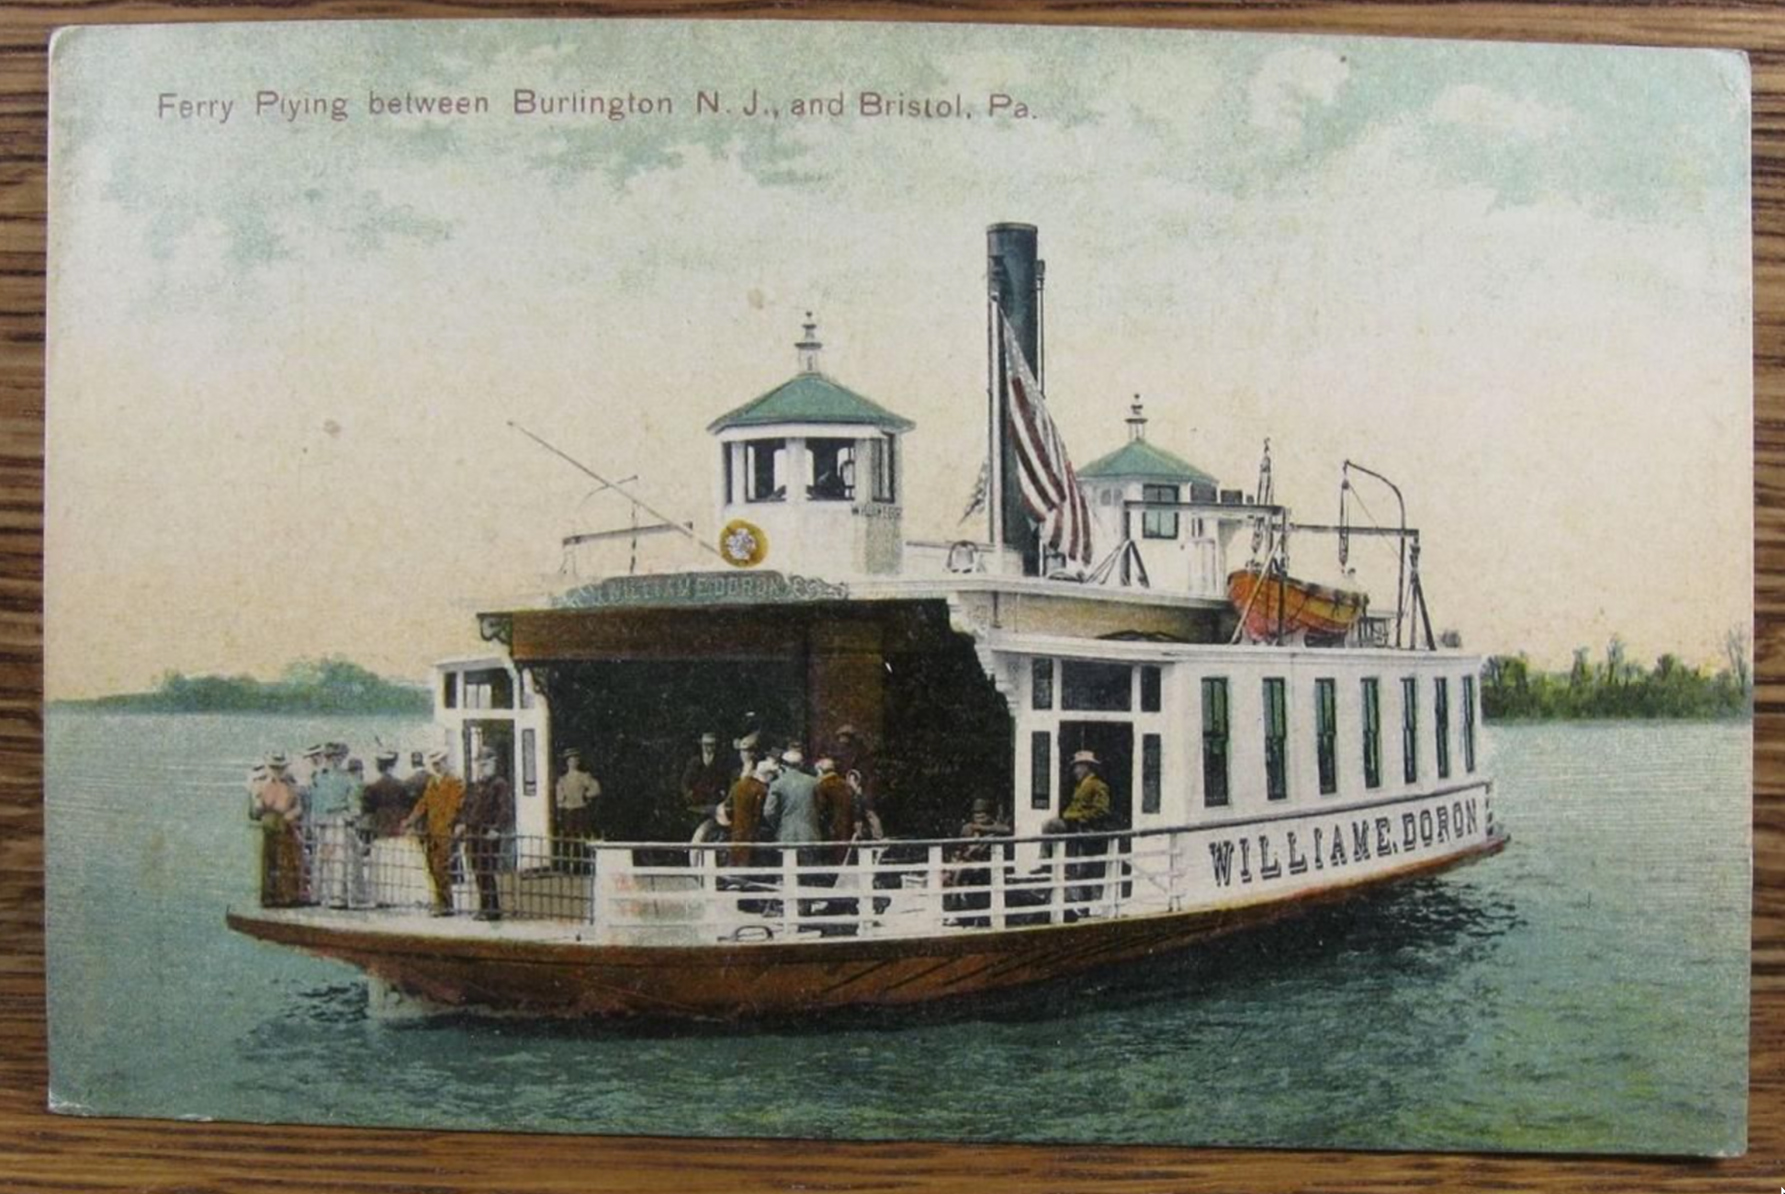 Burlington - The Ferry William E Dpran that ran between Burlington and Bristol PA - c 1910 or so